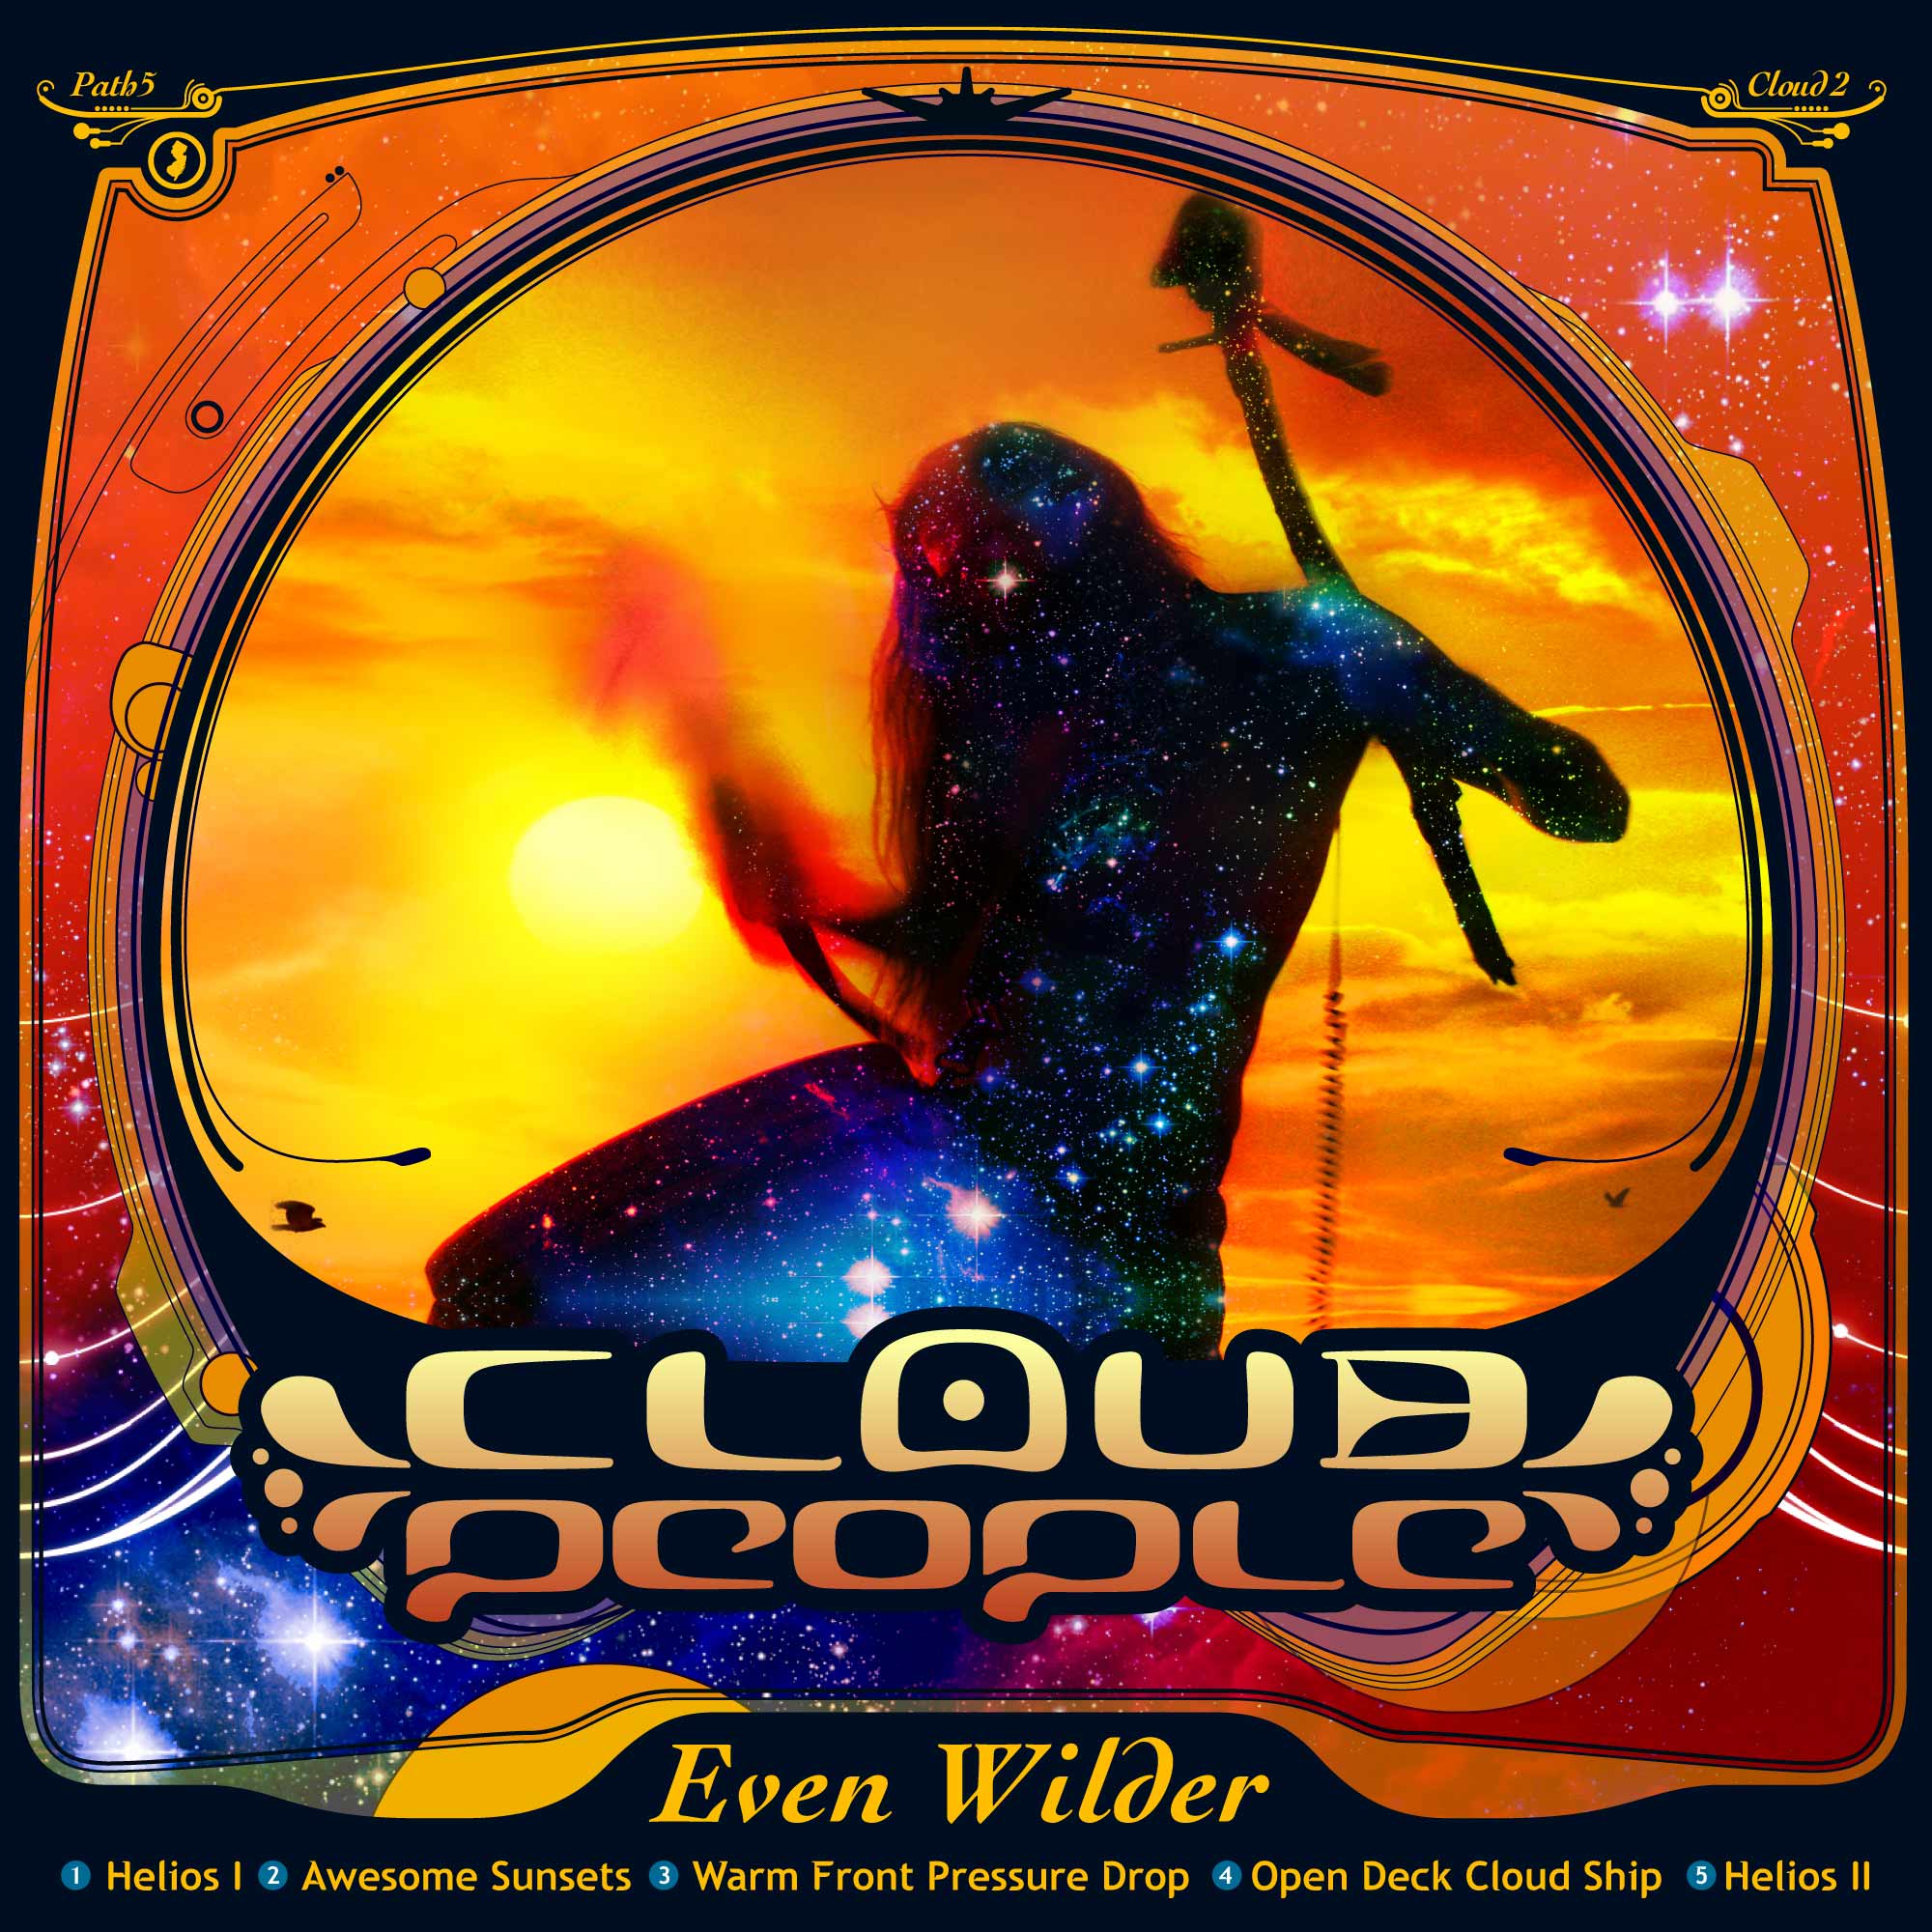 Cloud People - "Even Wilder" - PATH5